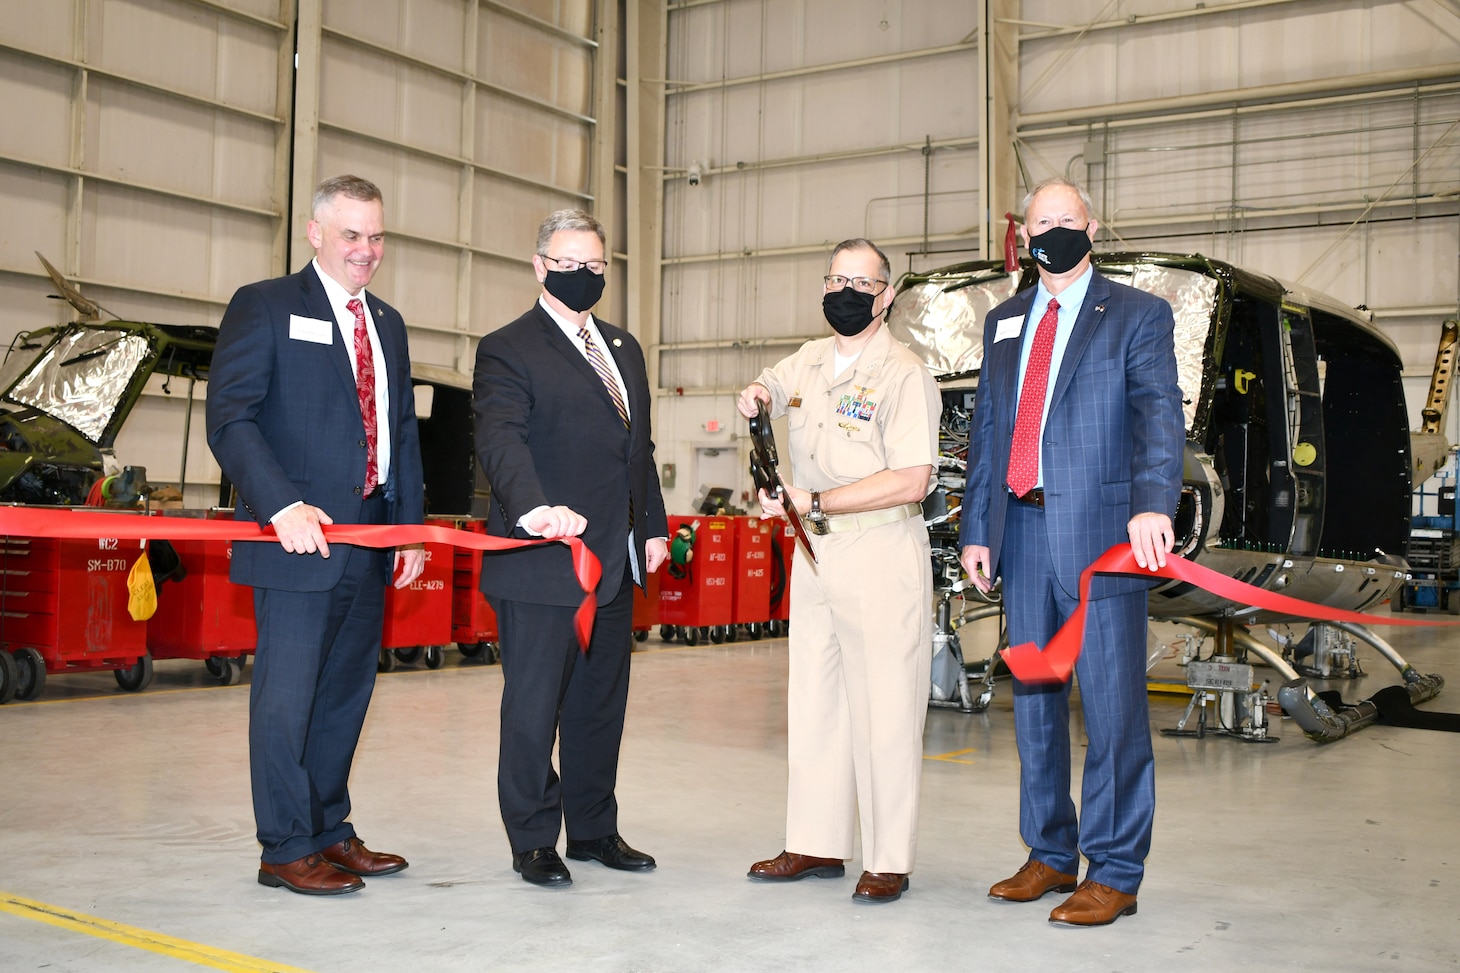 Ribbon cutting ceremony celebrates opening of new facility